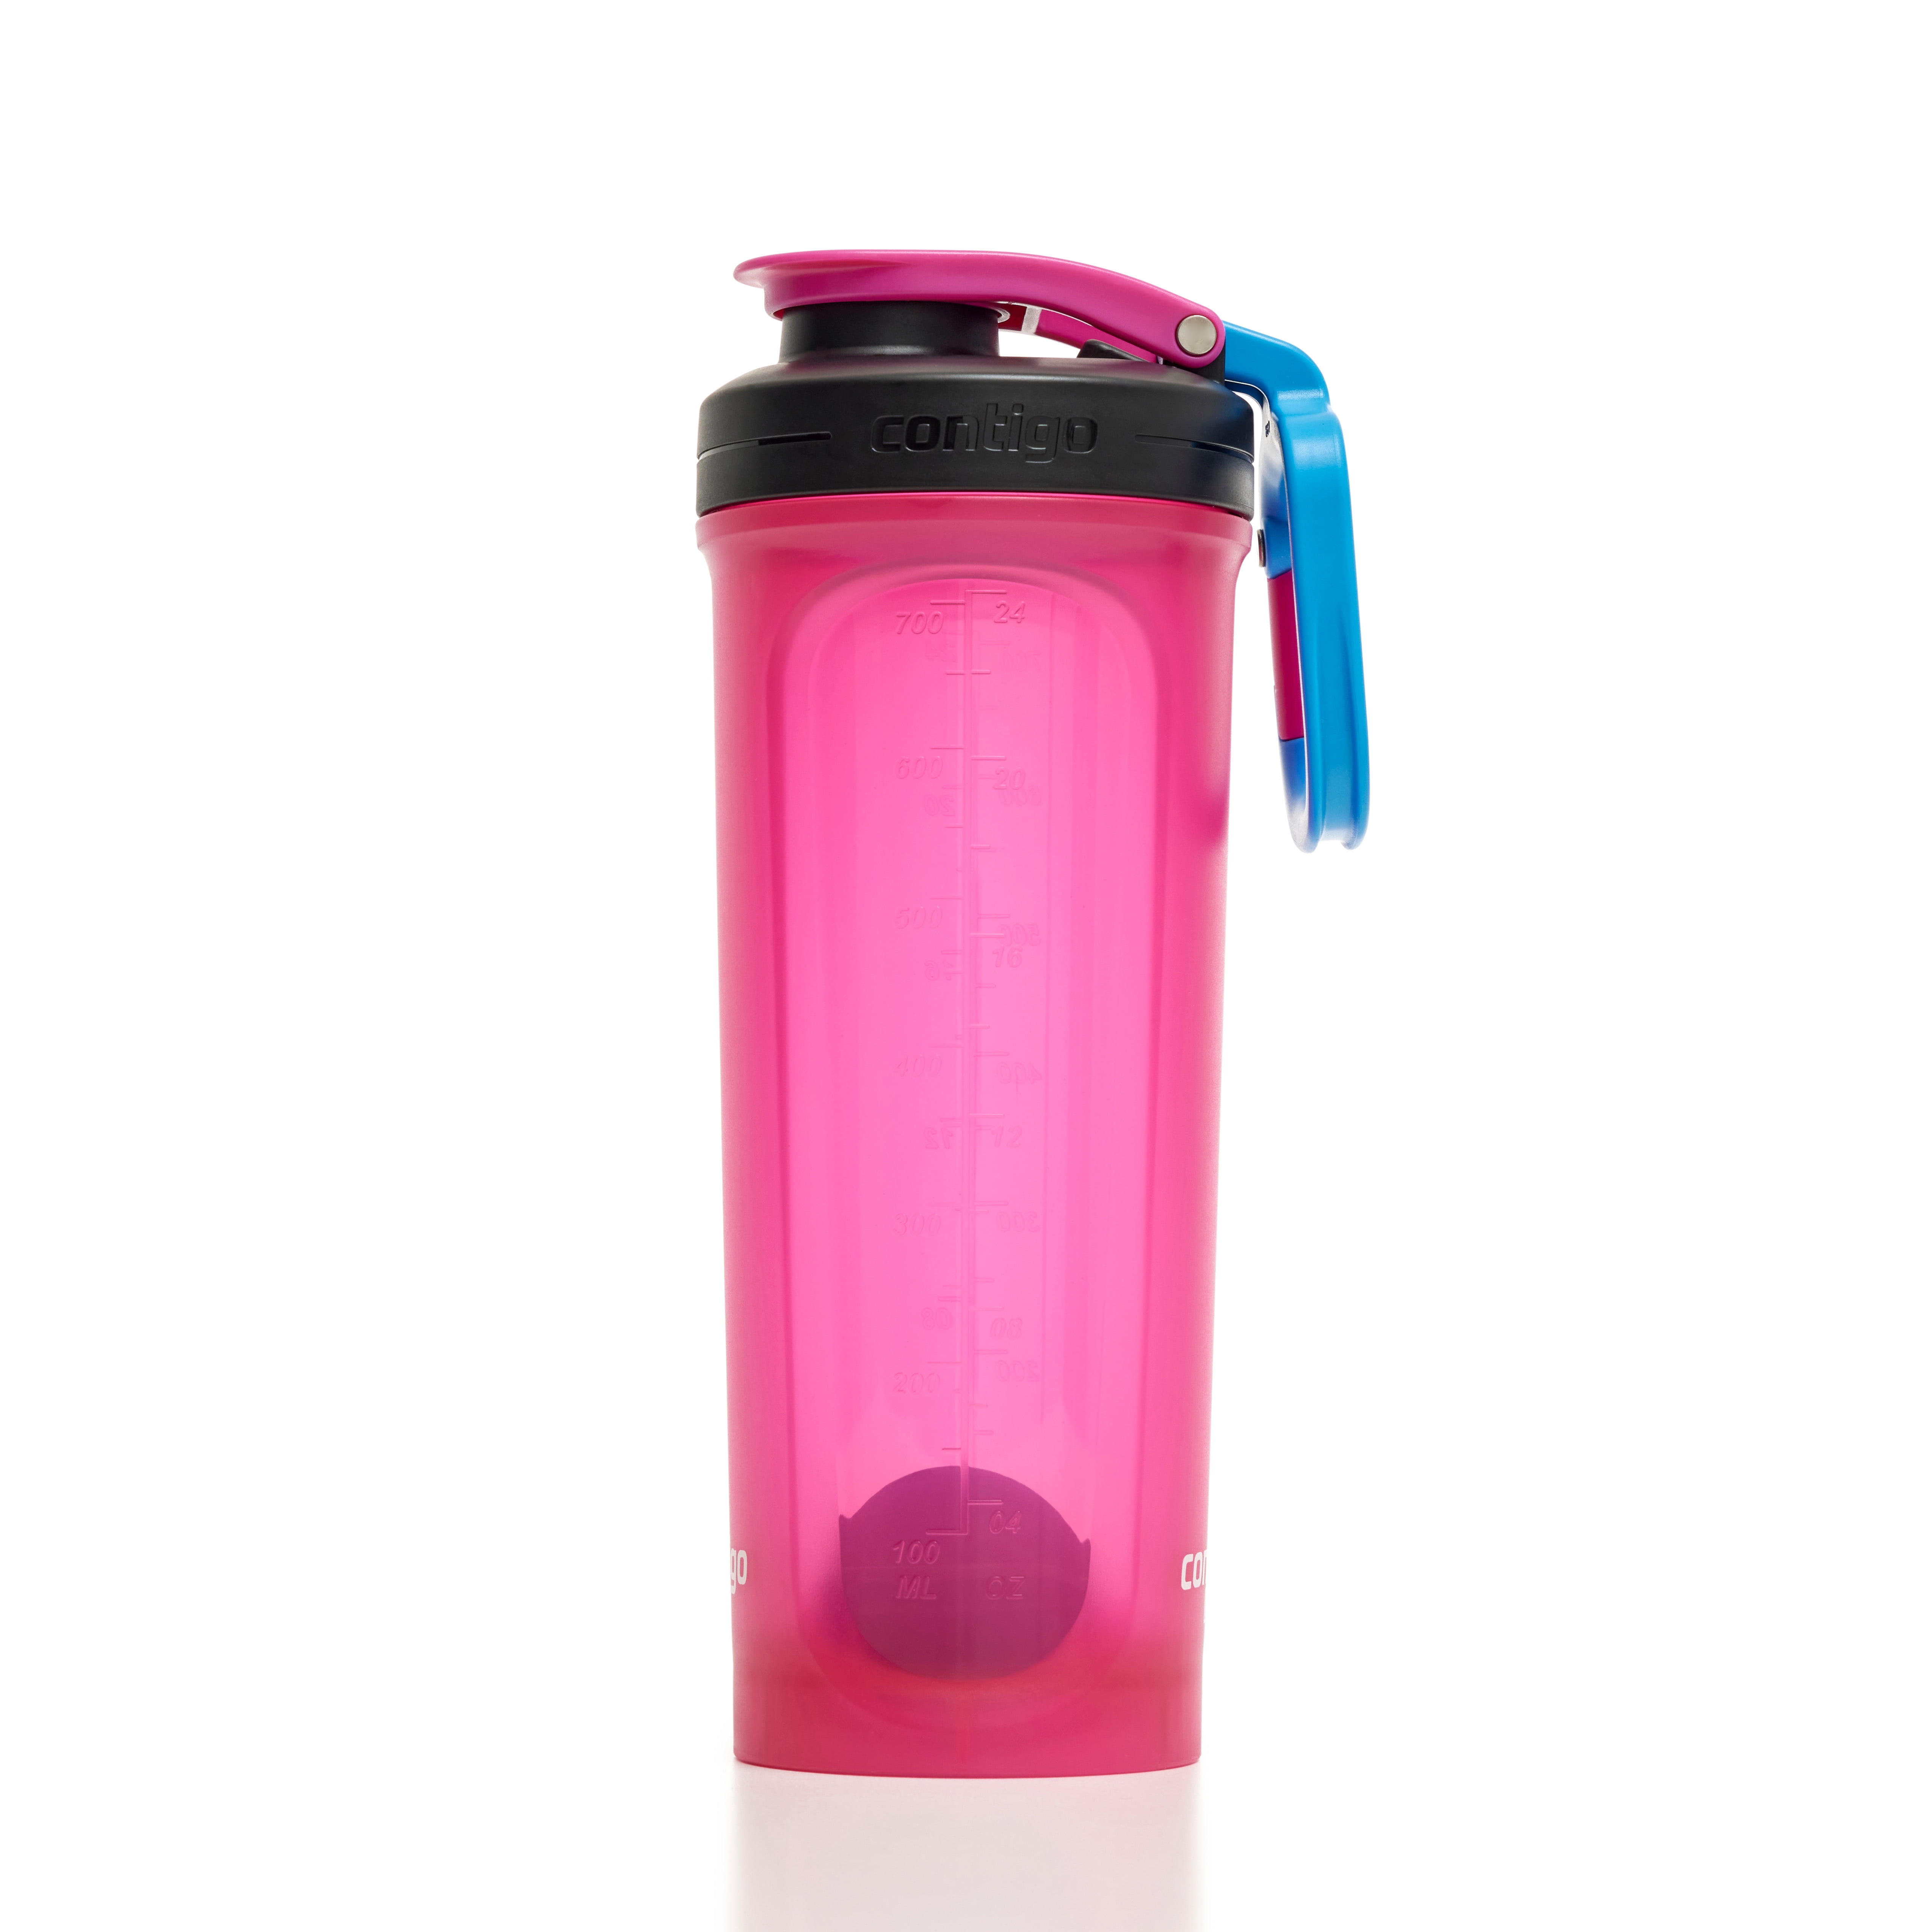 Contigo Fit Shake & Go 2.0 Shaker Bottle in Pink, 28 fl oz.